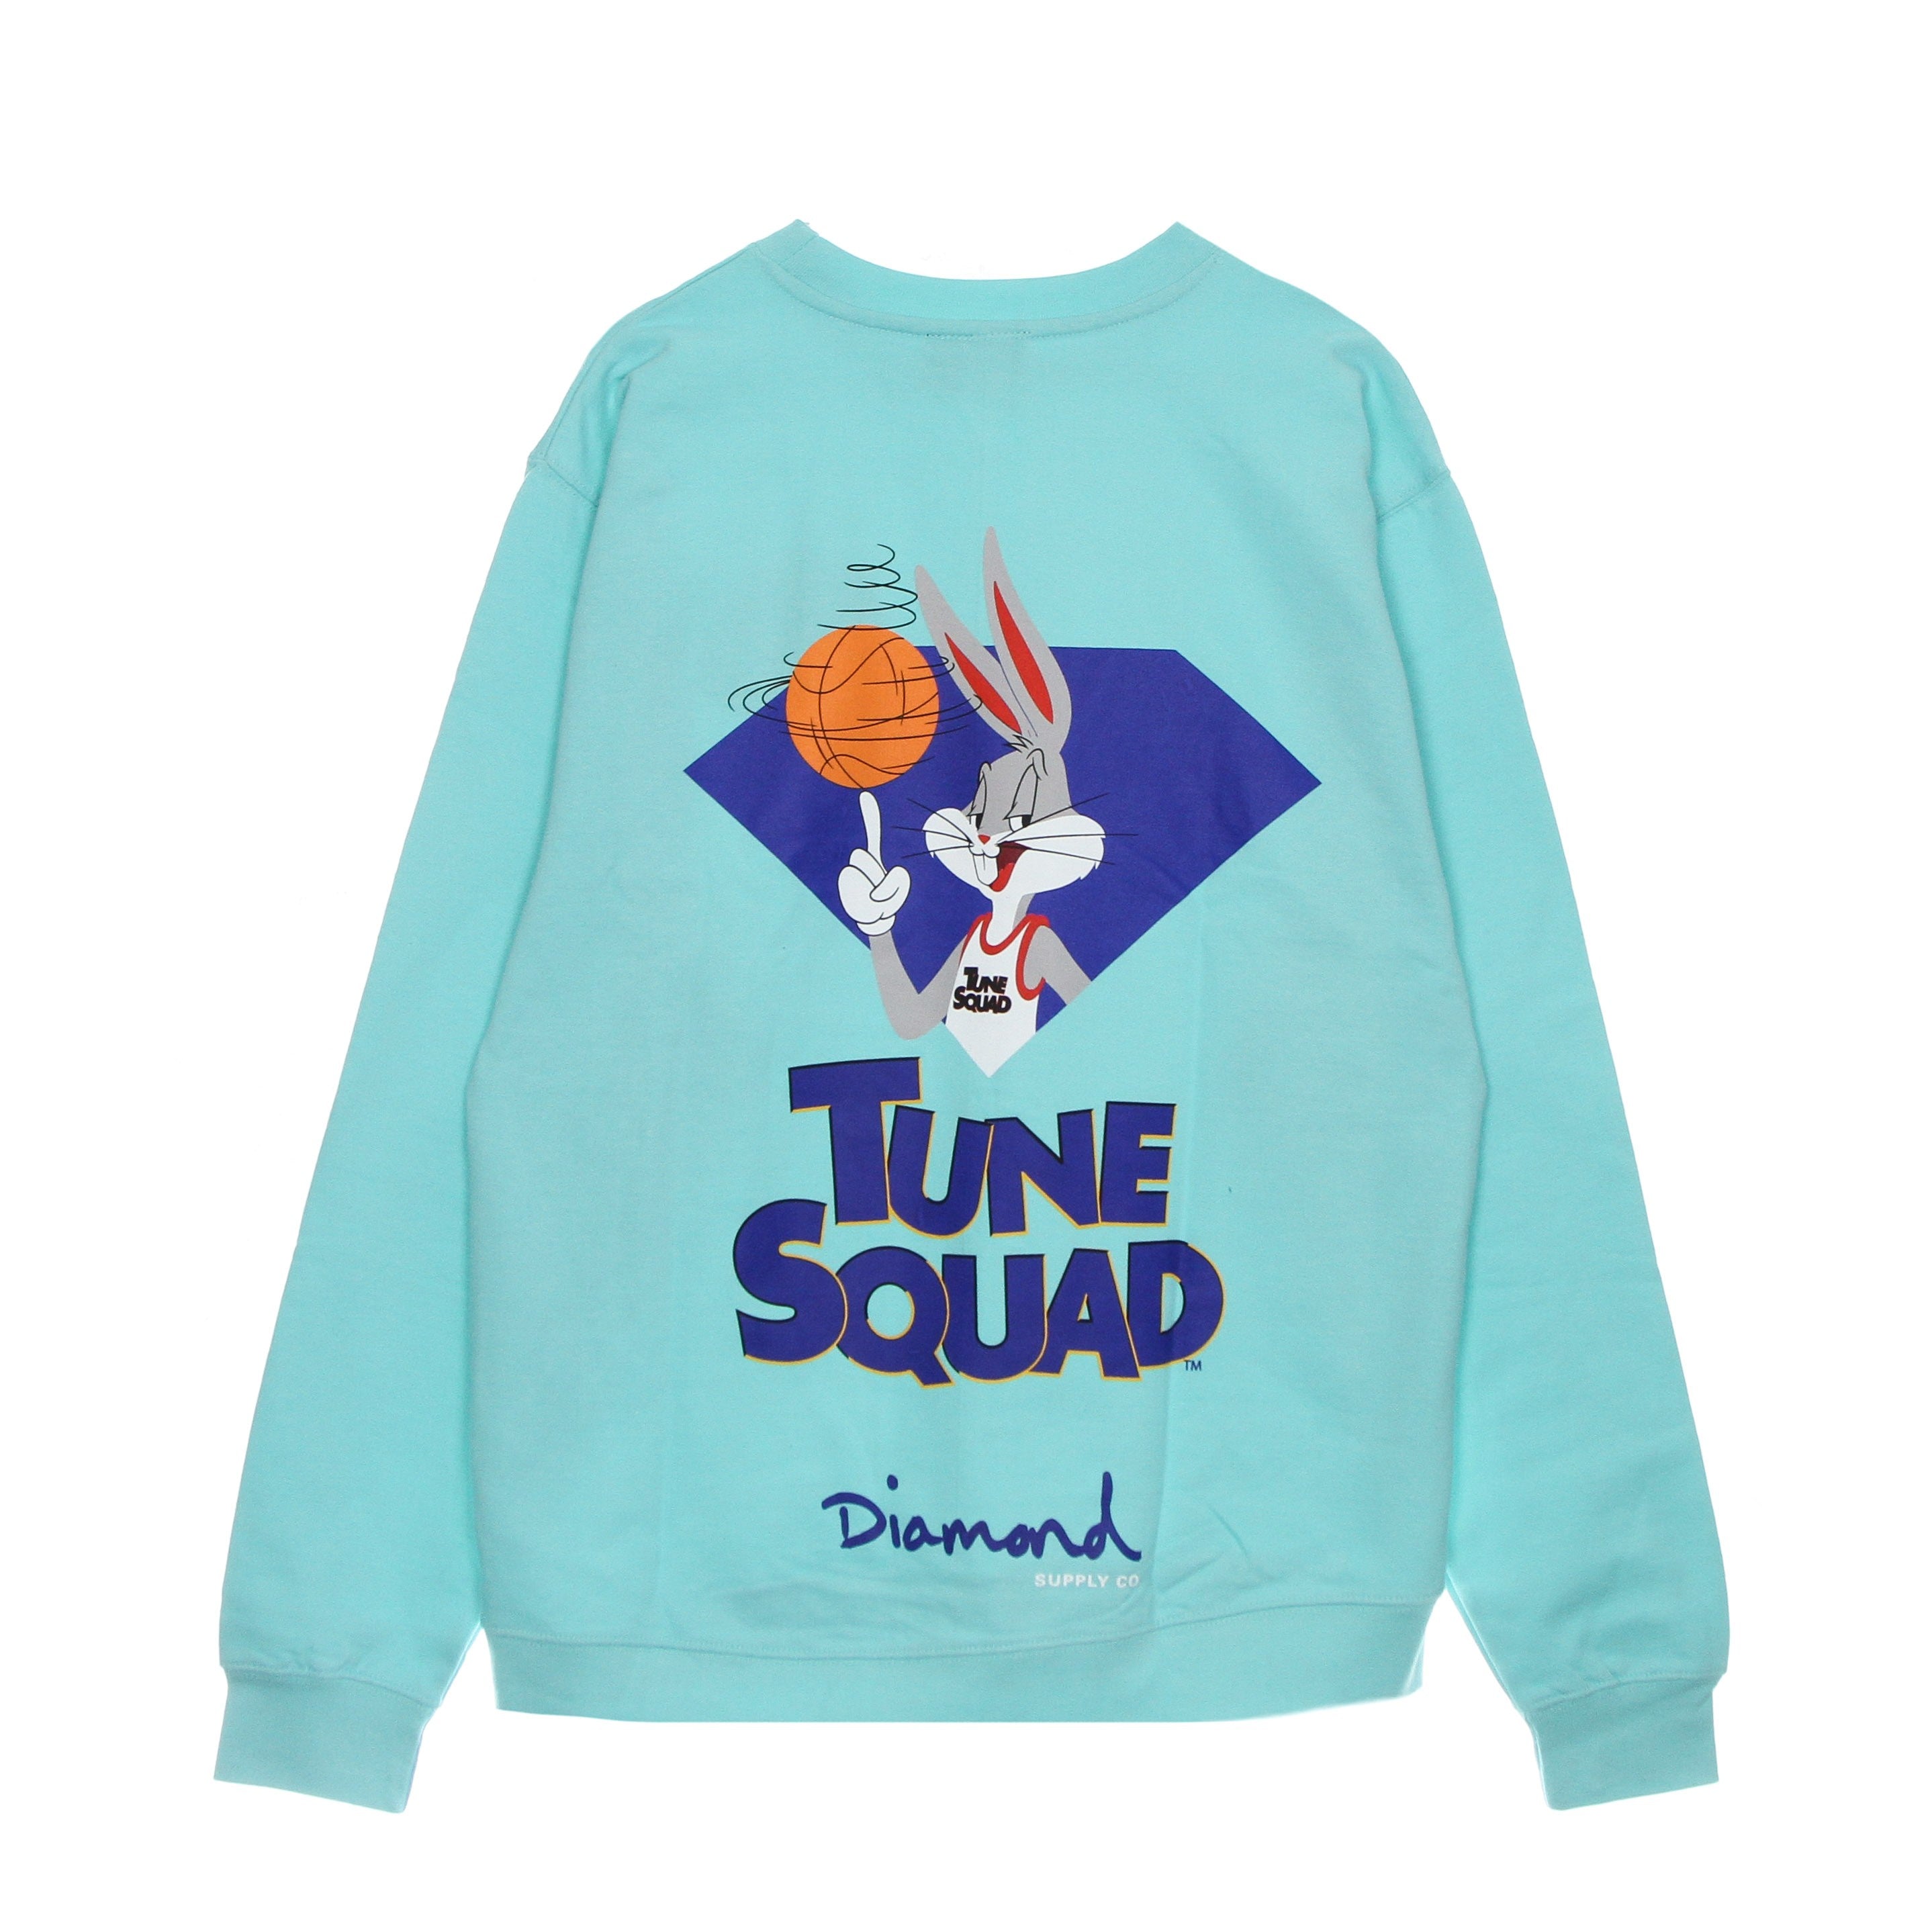 Bugs Bunny Crew X Space Jam 2 Men's Crewneck Sweatshirt Diamond Blue